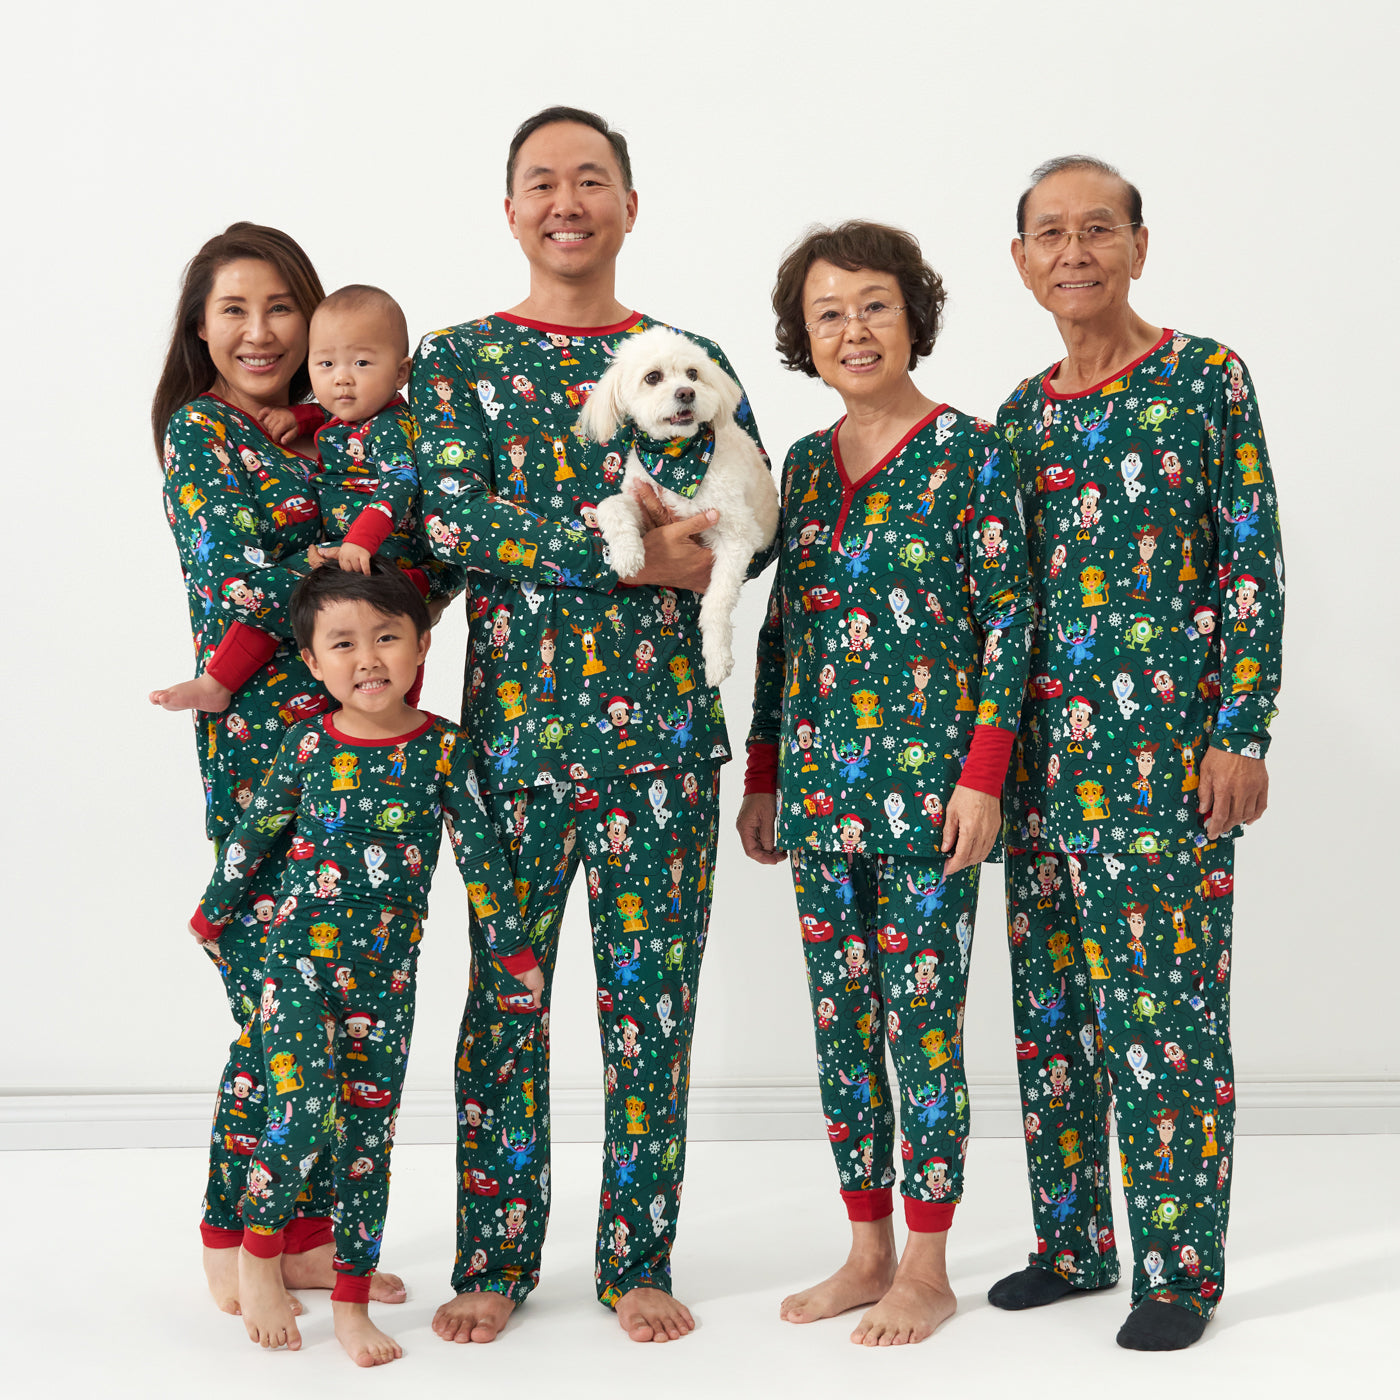 Family and dog wearing matching Disney Christmas Party pajamas and pet bandana